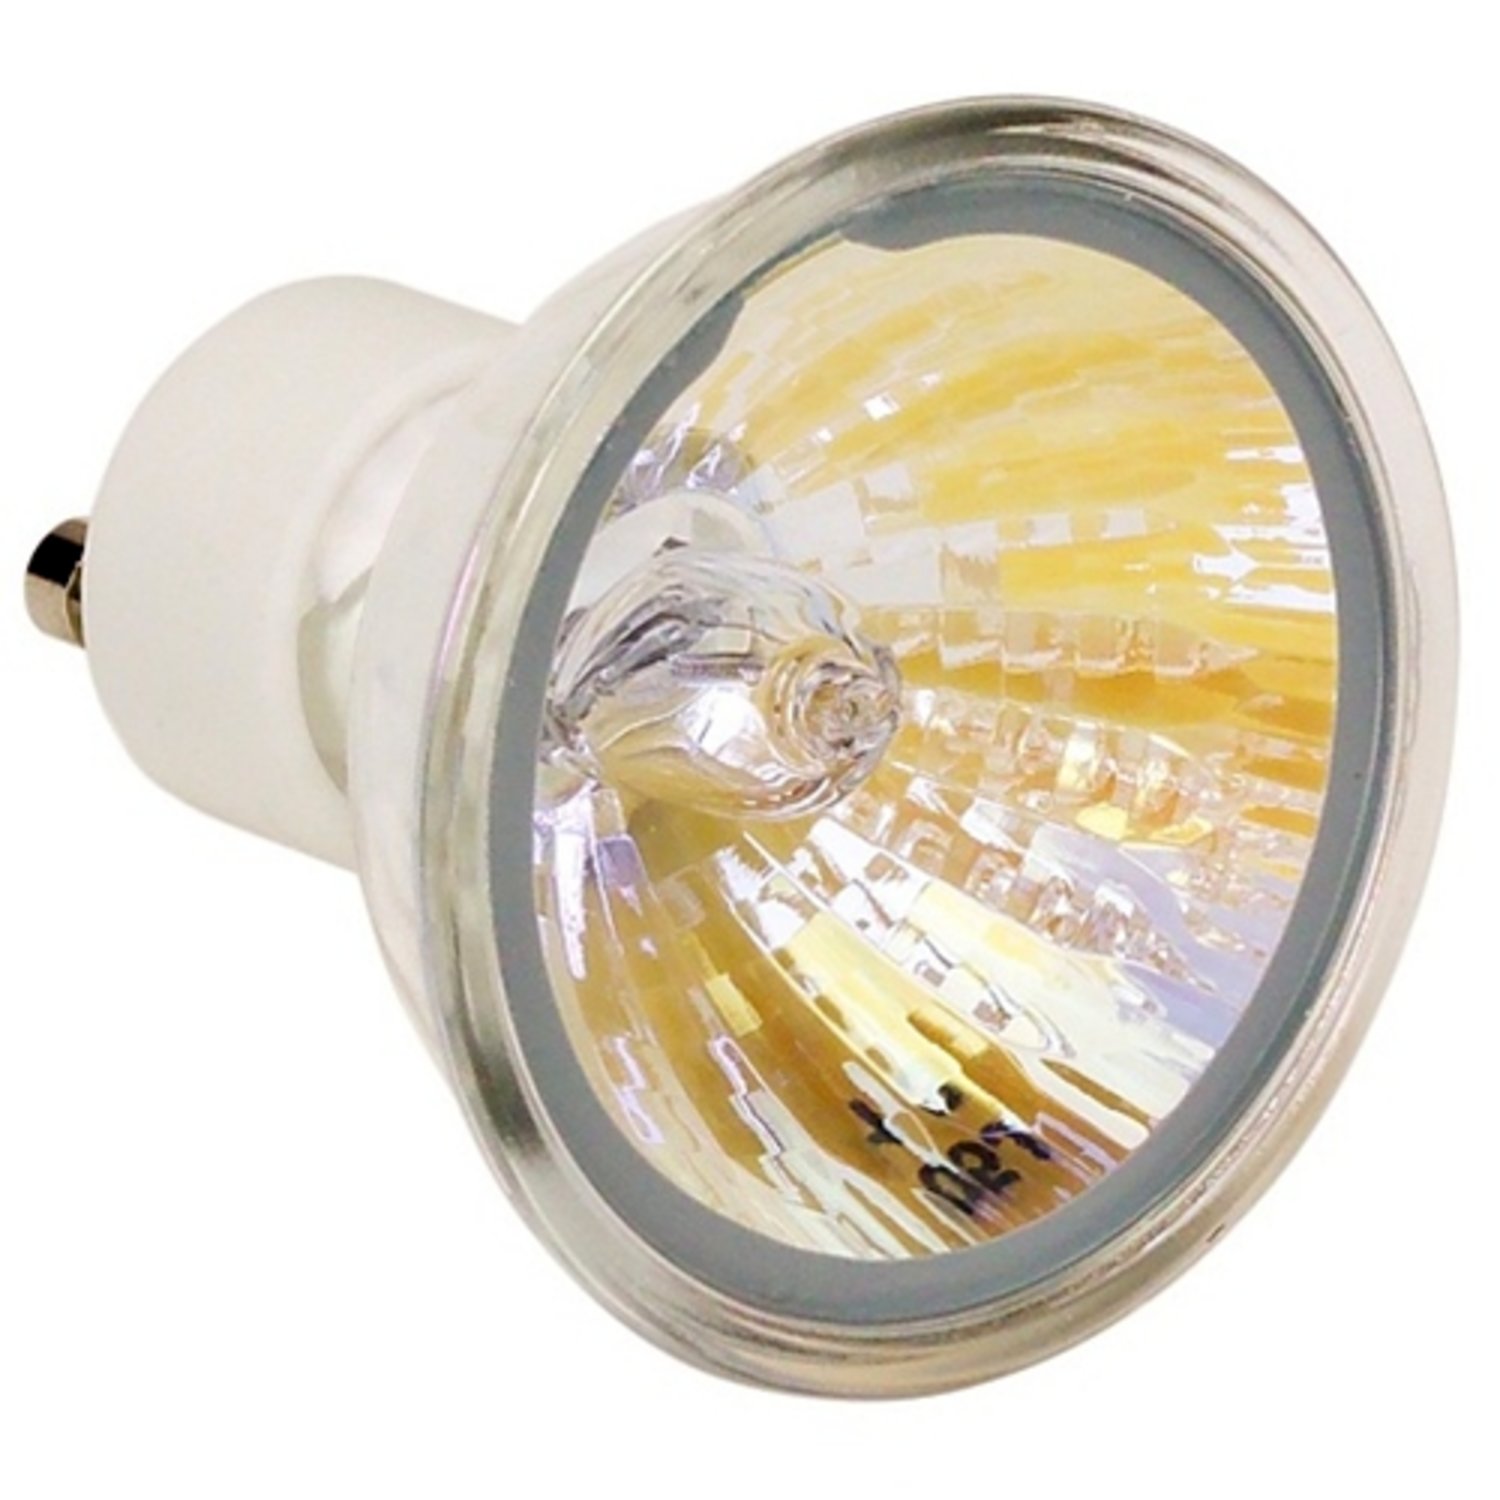 7100198811 - 3M PPS Colour Check Light Bulb, 16399, 1 per carton, 2 cartons per case